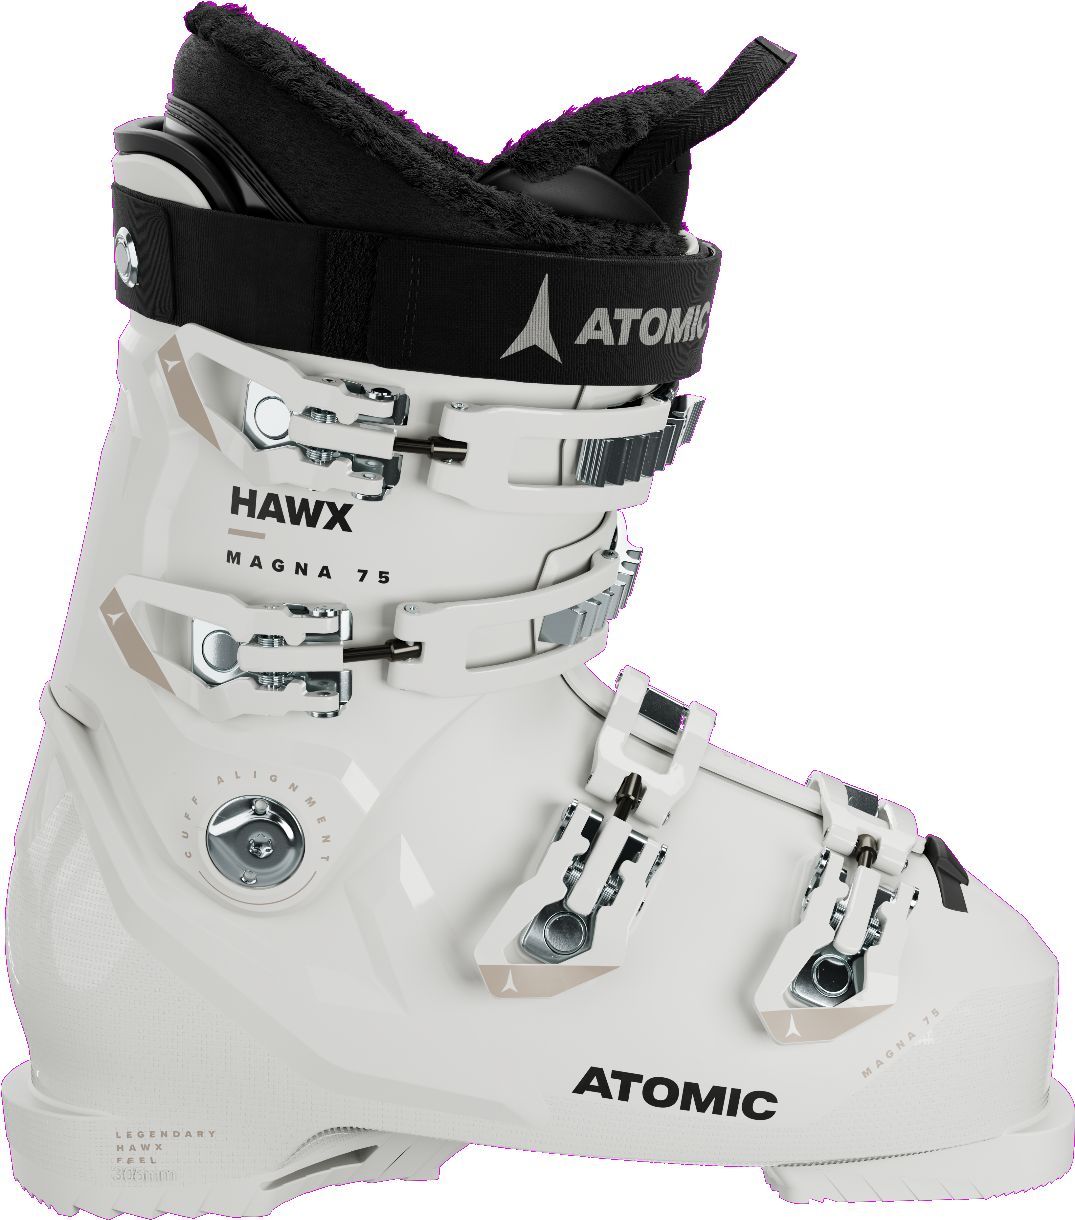 Atomic HAWX Magna 75 women's boot